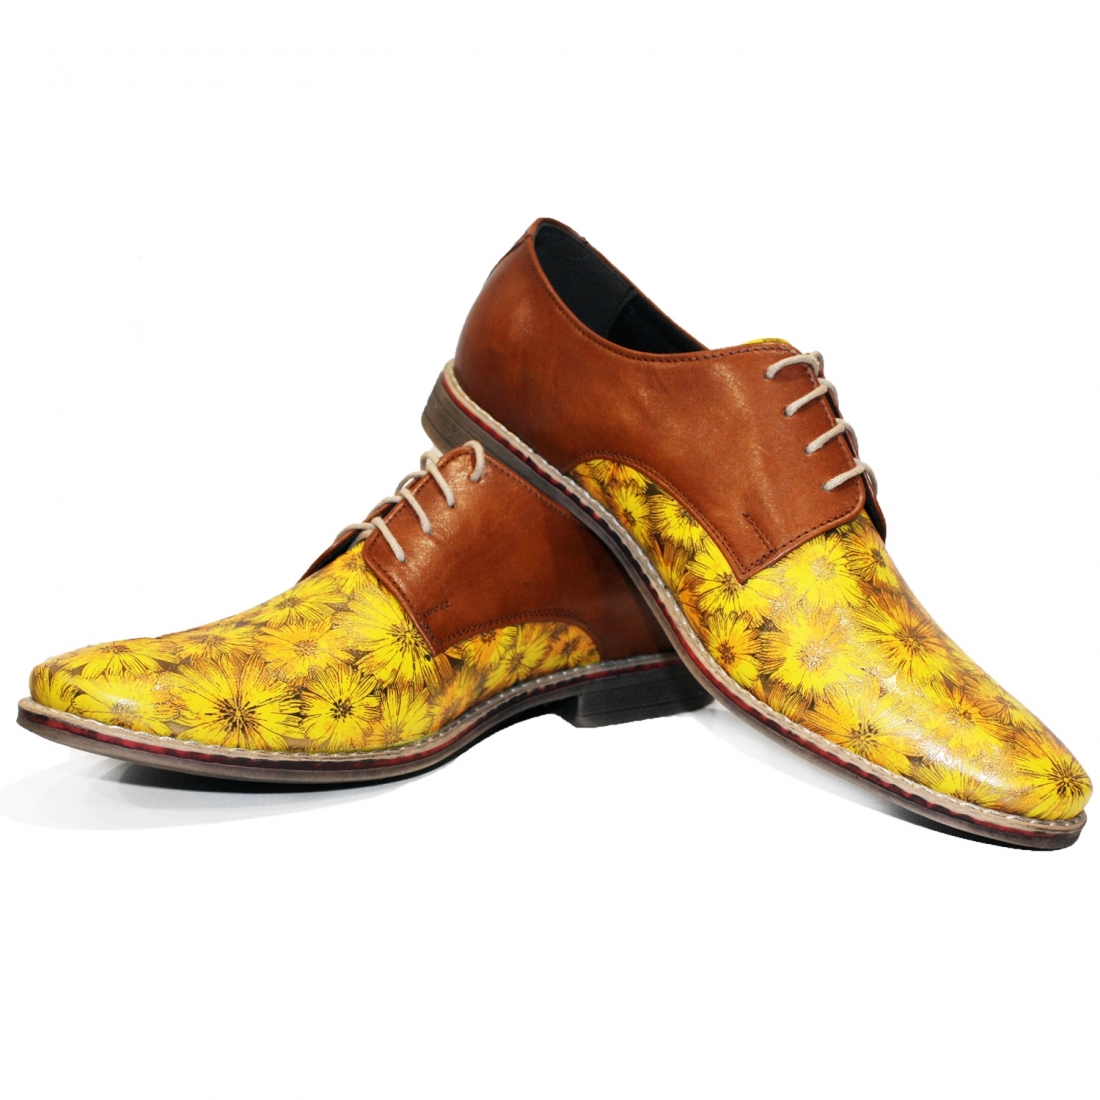 Modello Seamsone - Buty Klasyczne - Handmade Colorful Italian Leather Shoes